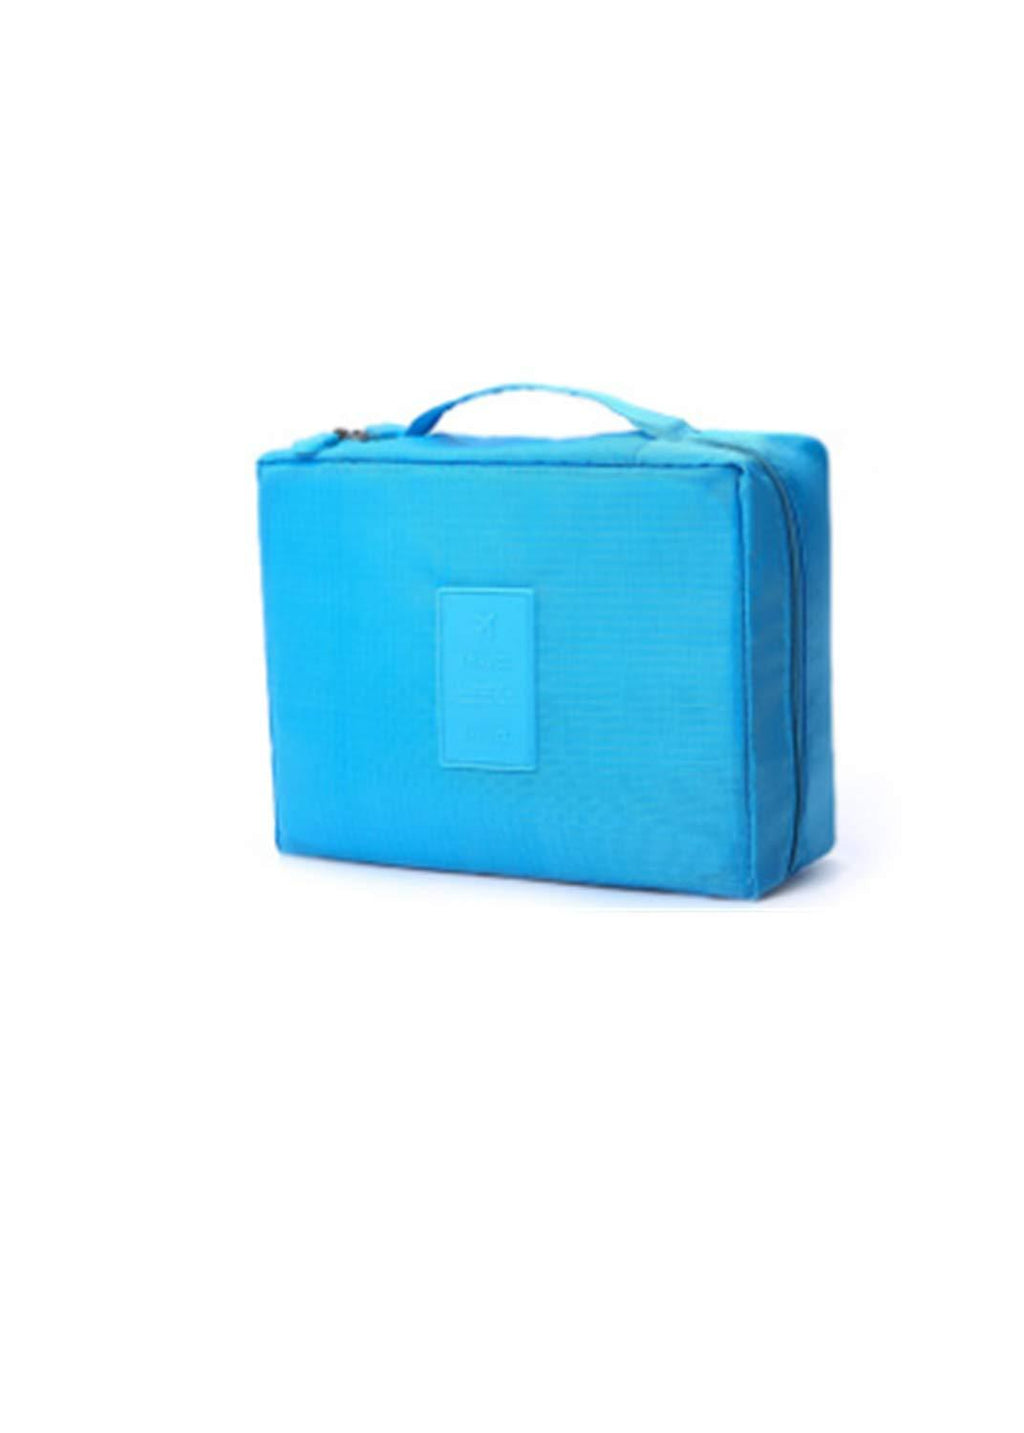 [Australia] - IOQSOF Korean Version Large Capacity Second Generation wash Simple Cosmetic Bag Multi-Function Travel Storage Pouch, Light Blue 